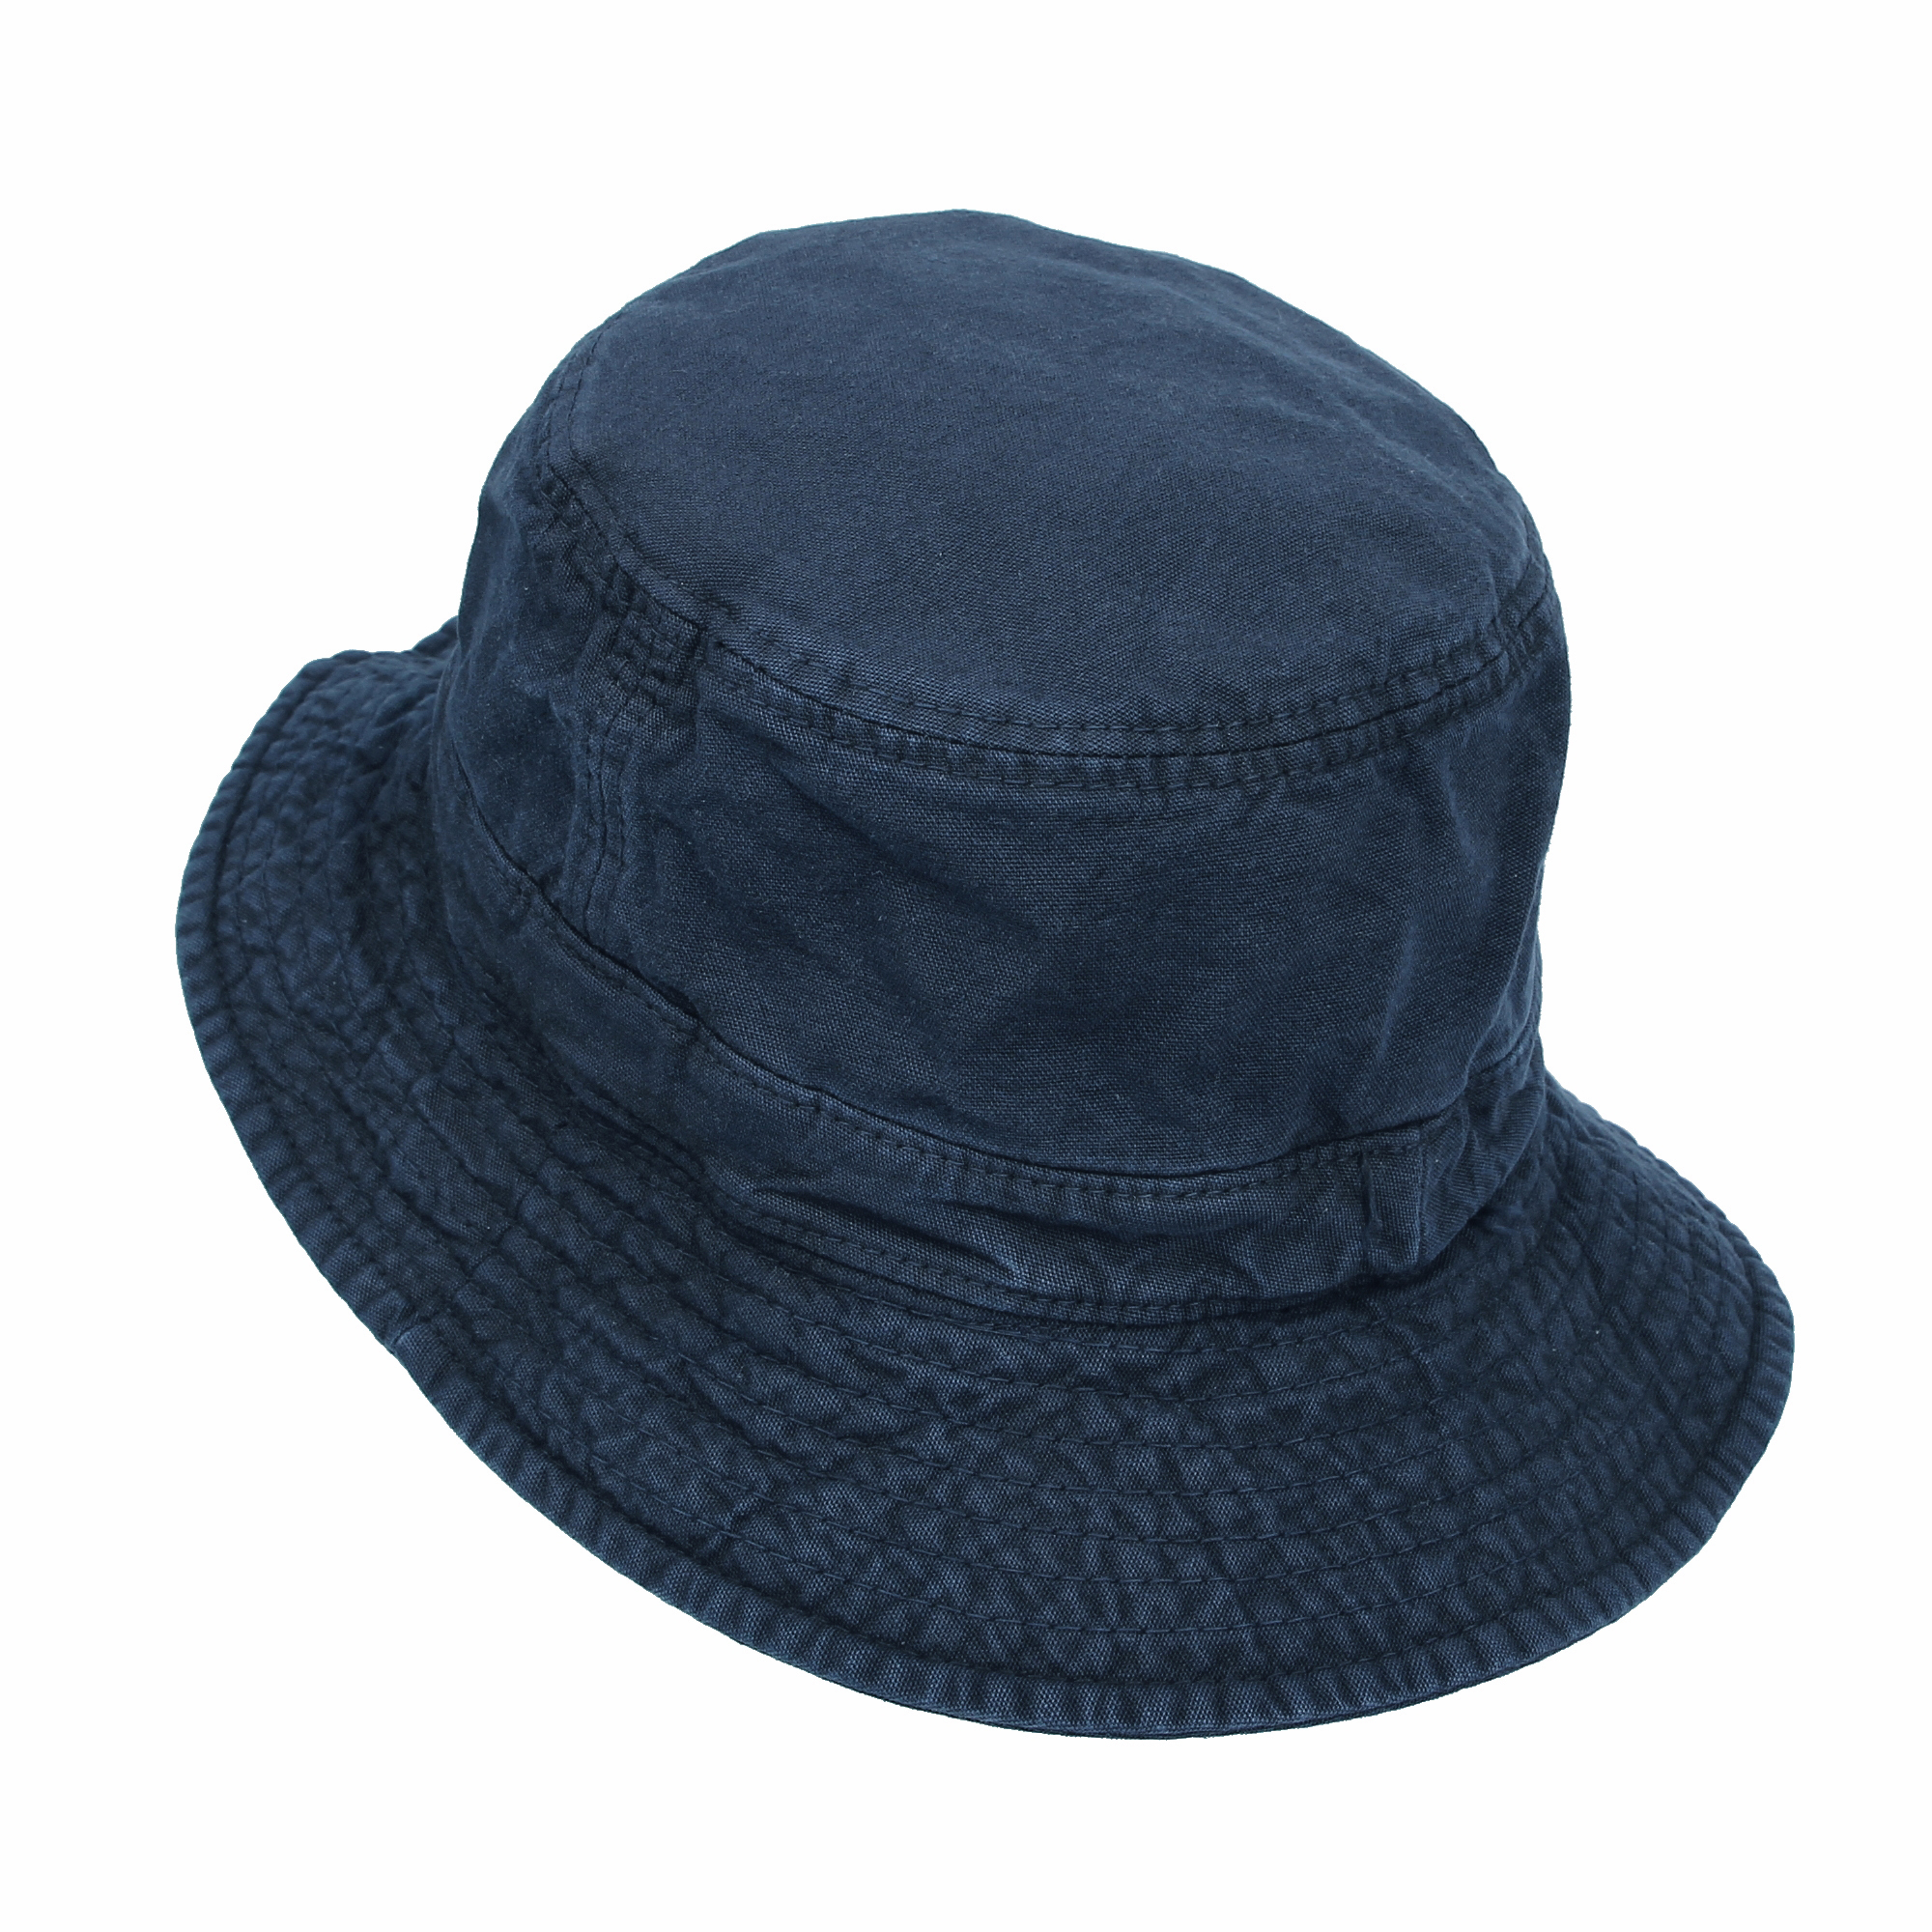 WITHMOONS Boonie Fishing Bucket Hat Safari Summer Cotton Cap KRB1172 | eBay